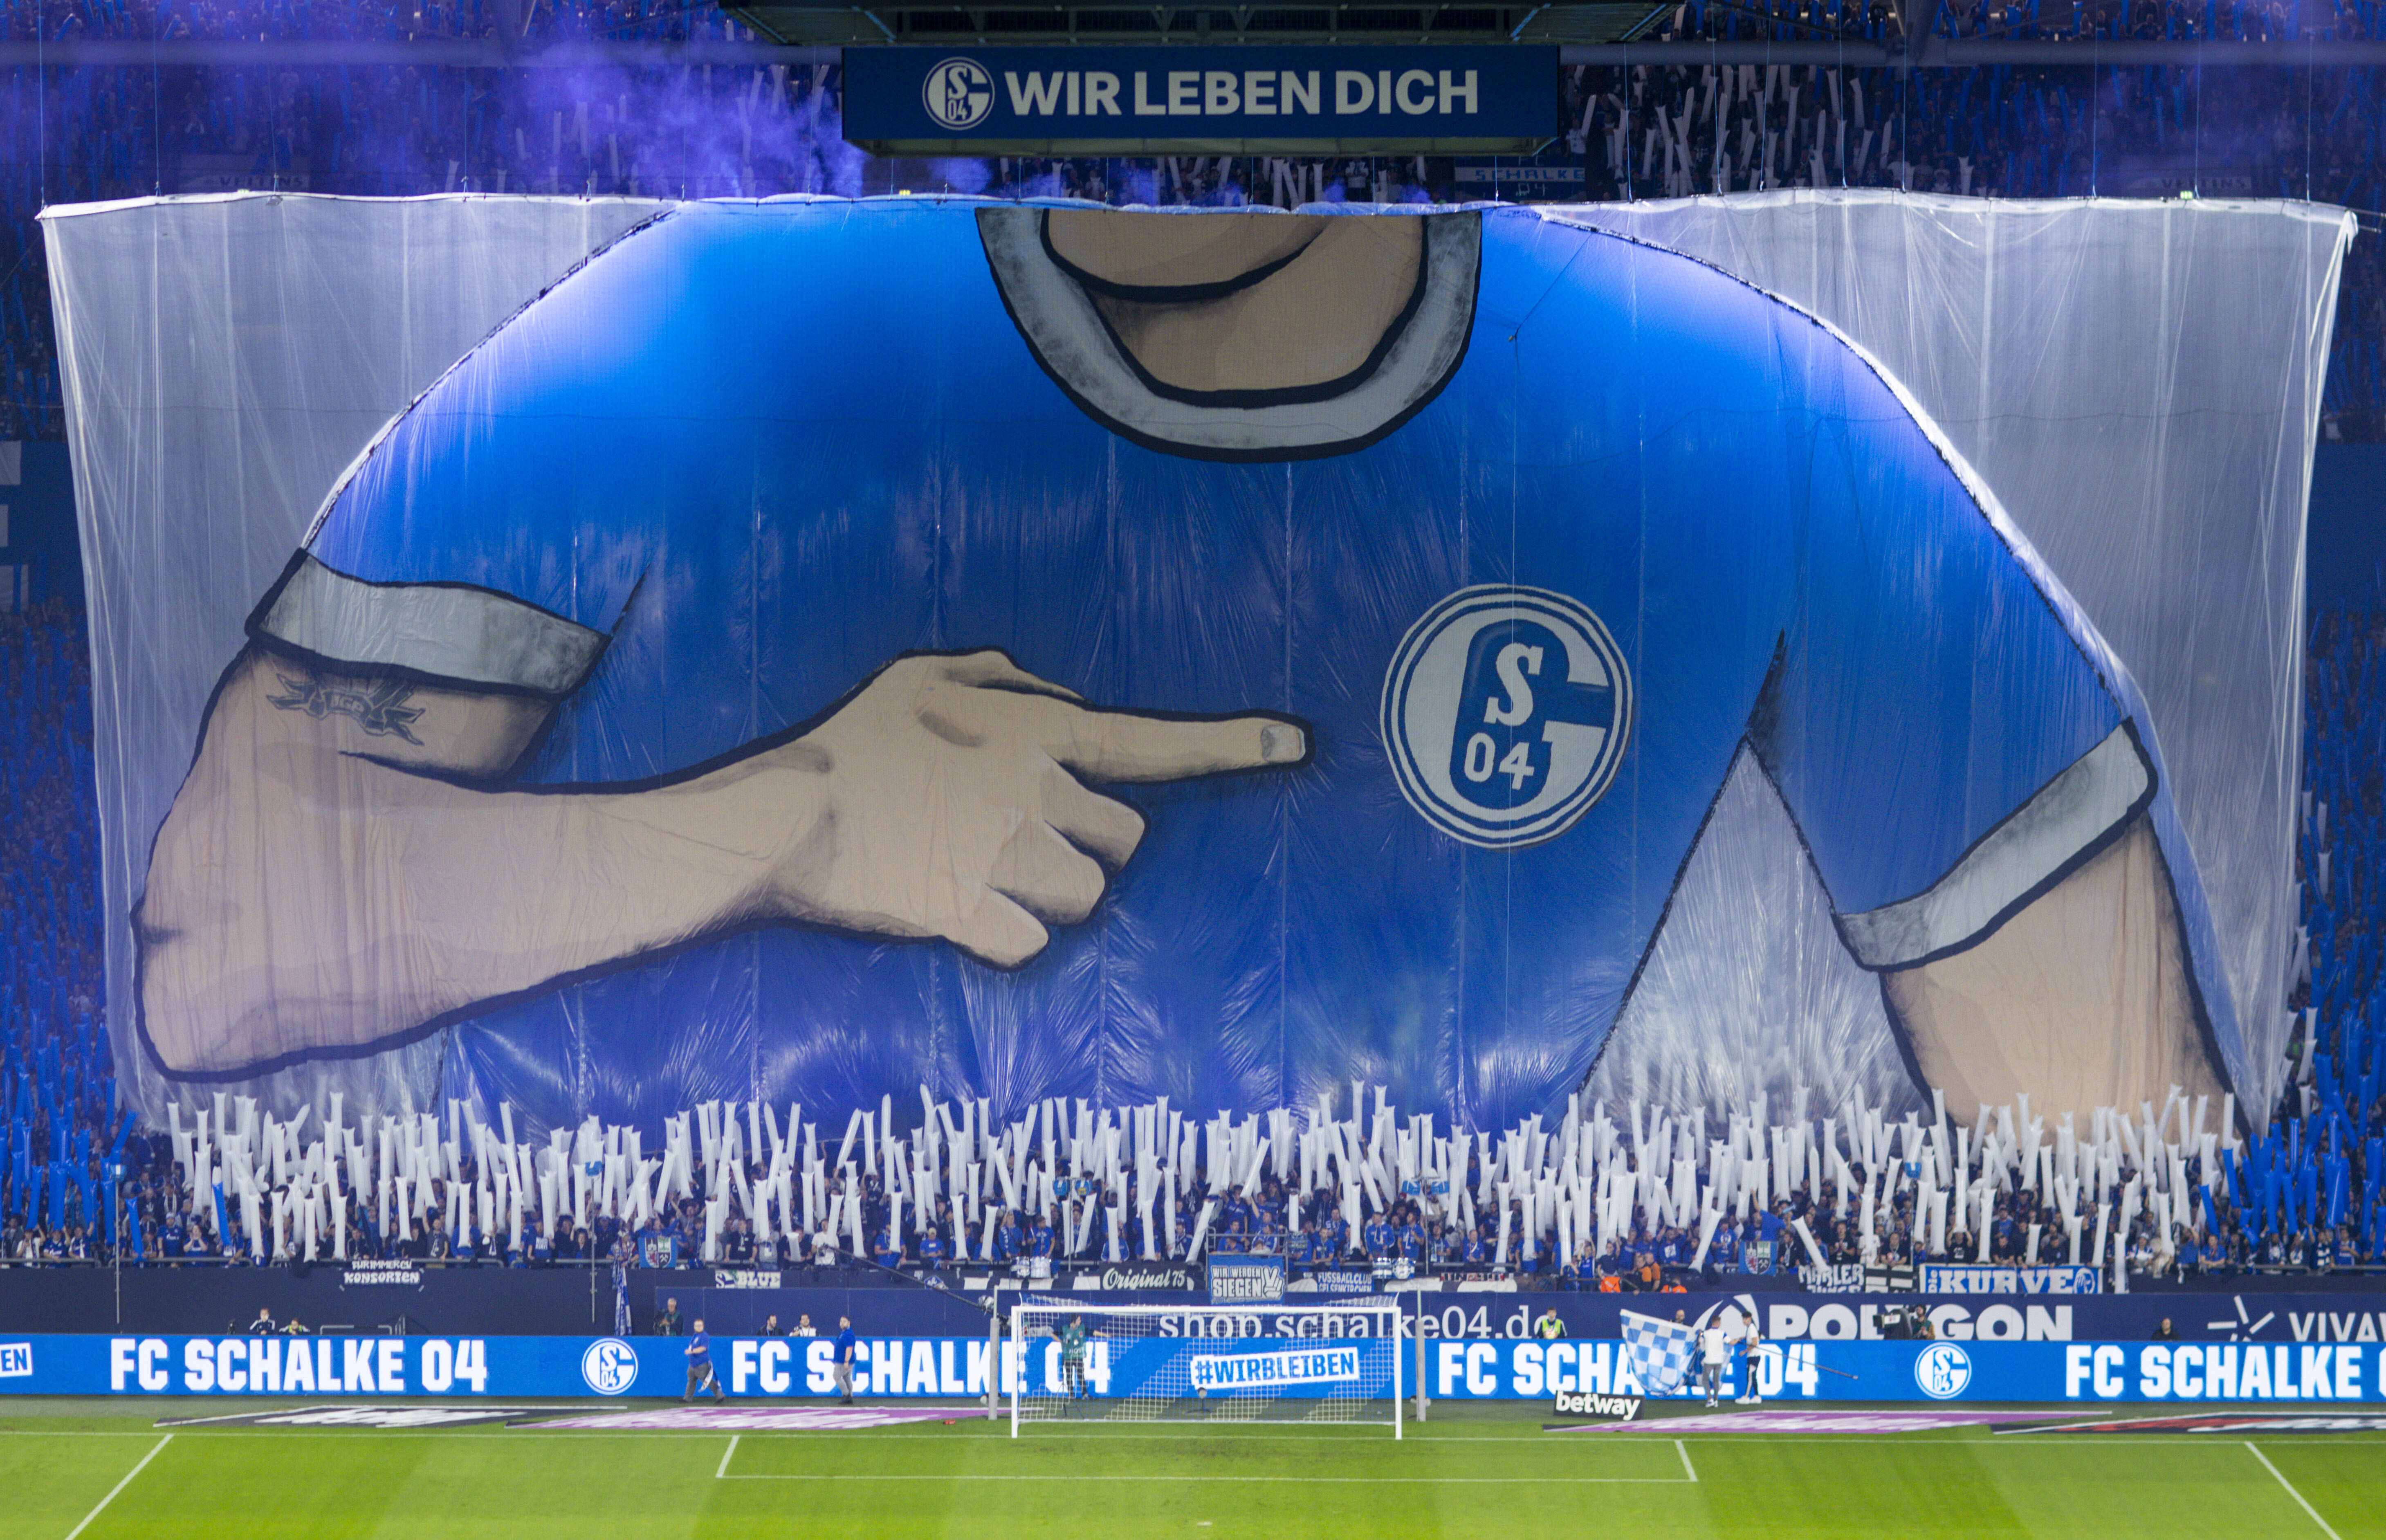 FC Schalke 04: Juwel viene corteggiato